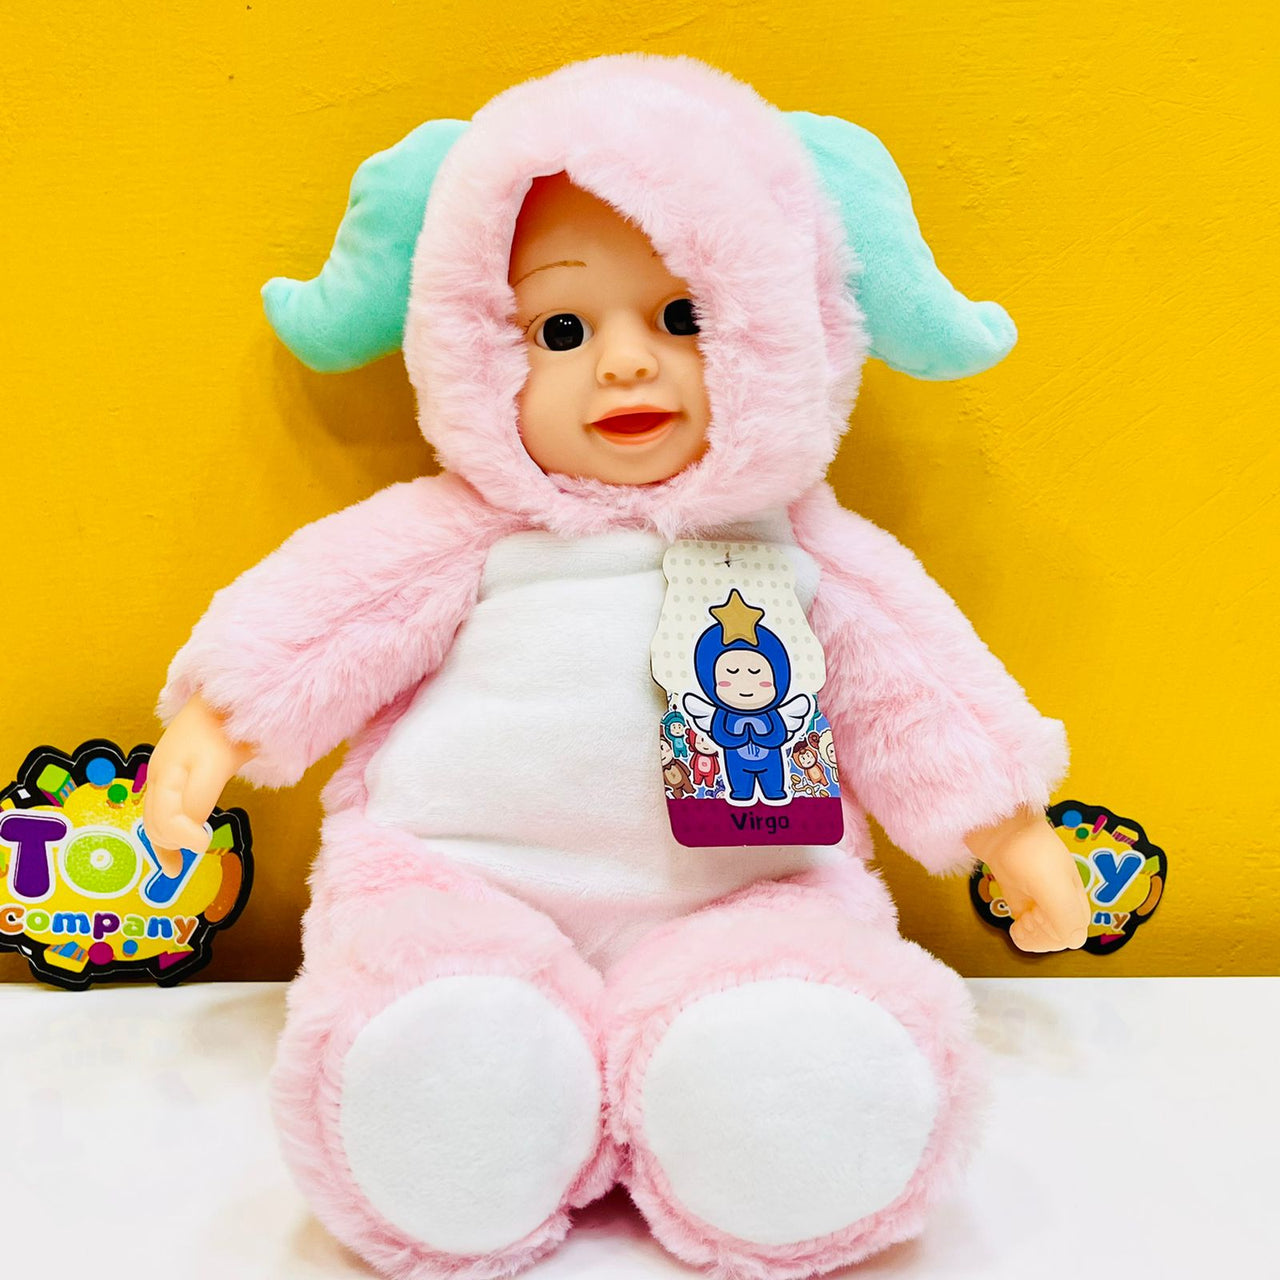 25cm Premium Realistic Stuffed Baby Doll - Assortment